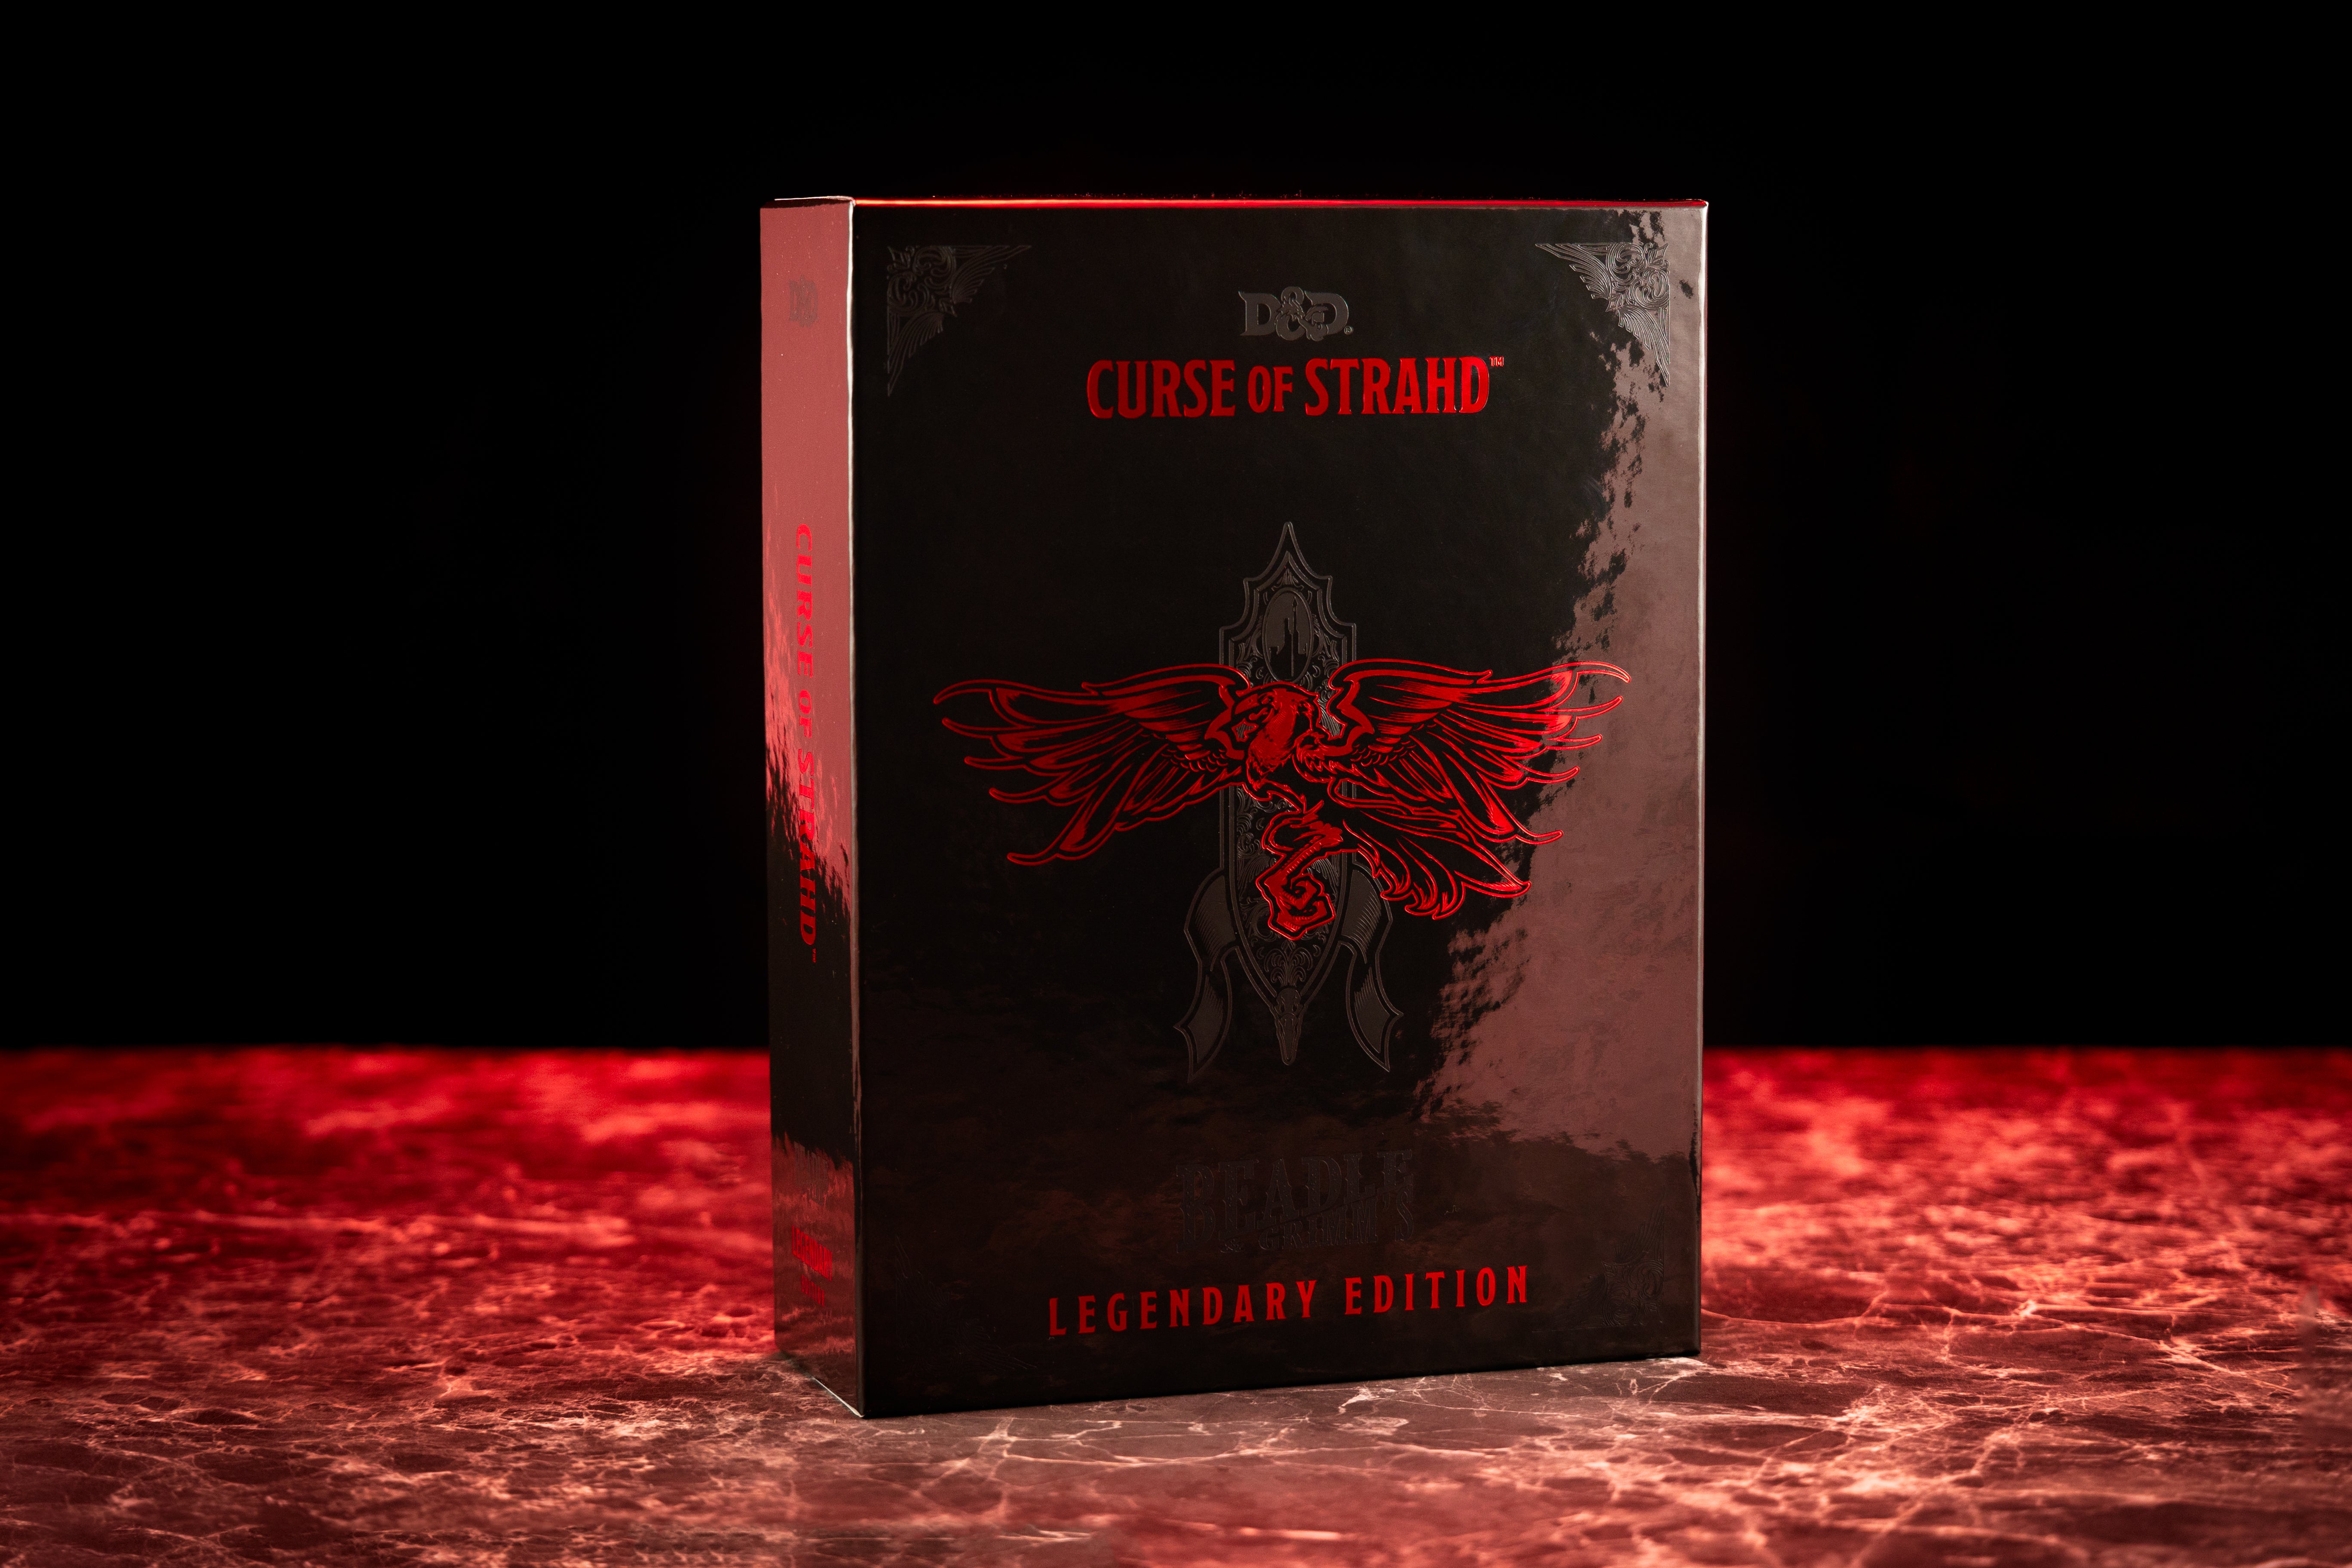 Legendary Edition of Curse of Strahd (D&D)